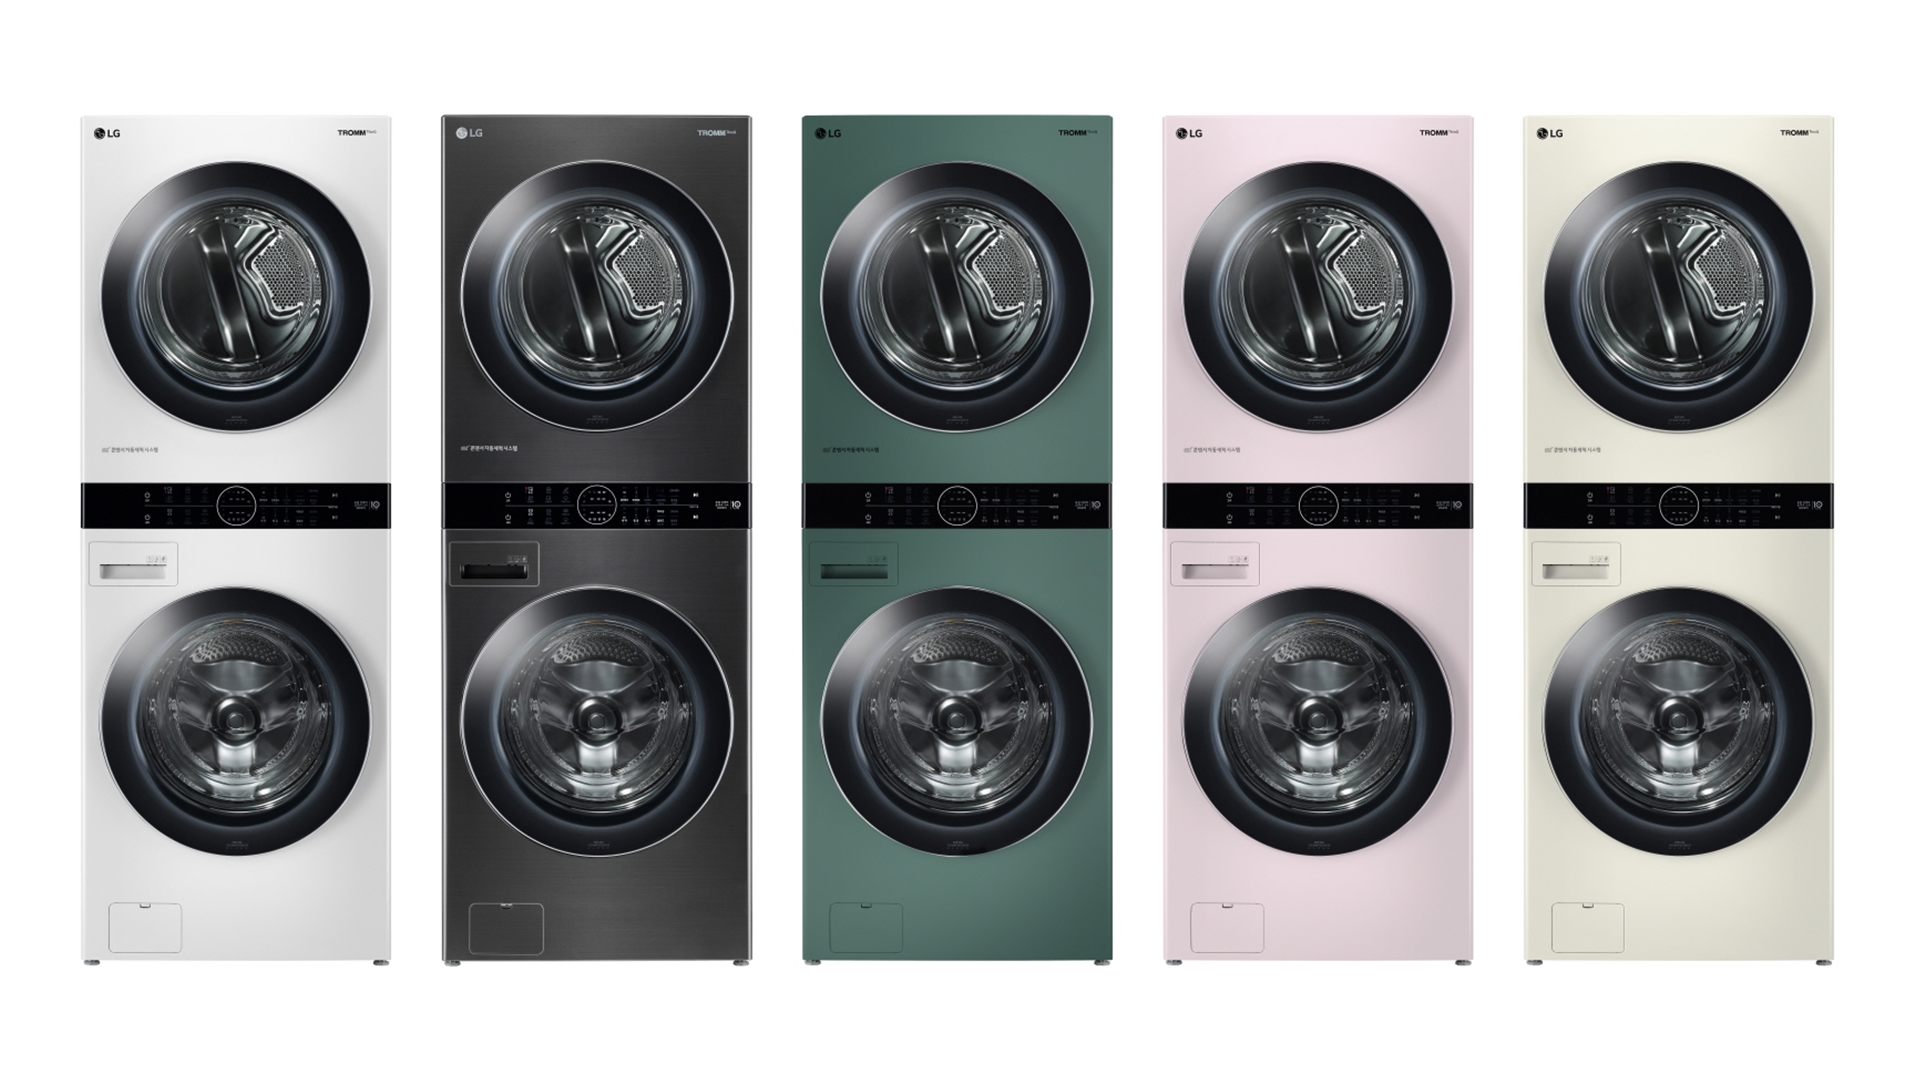 LG전자가 지난달 말 출시한 원바디 세탁건조기 ‘트롬 워시타워’가 출시 3주만에 판매량 1만대를 넘어섰다. 트롬 워시타워 제품사진(왼쪽부터 릴리 화이트, 스페이스 블랙, 포레스트 그린, 코랄 핑크, 샌드 베이지)